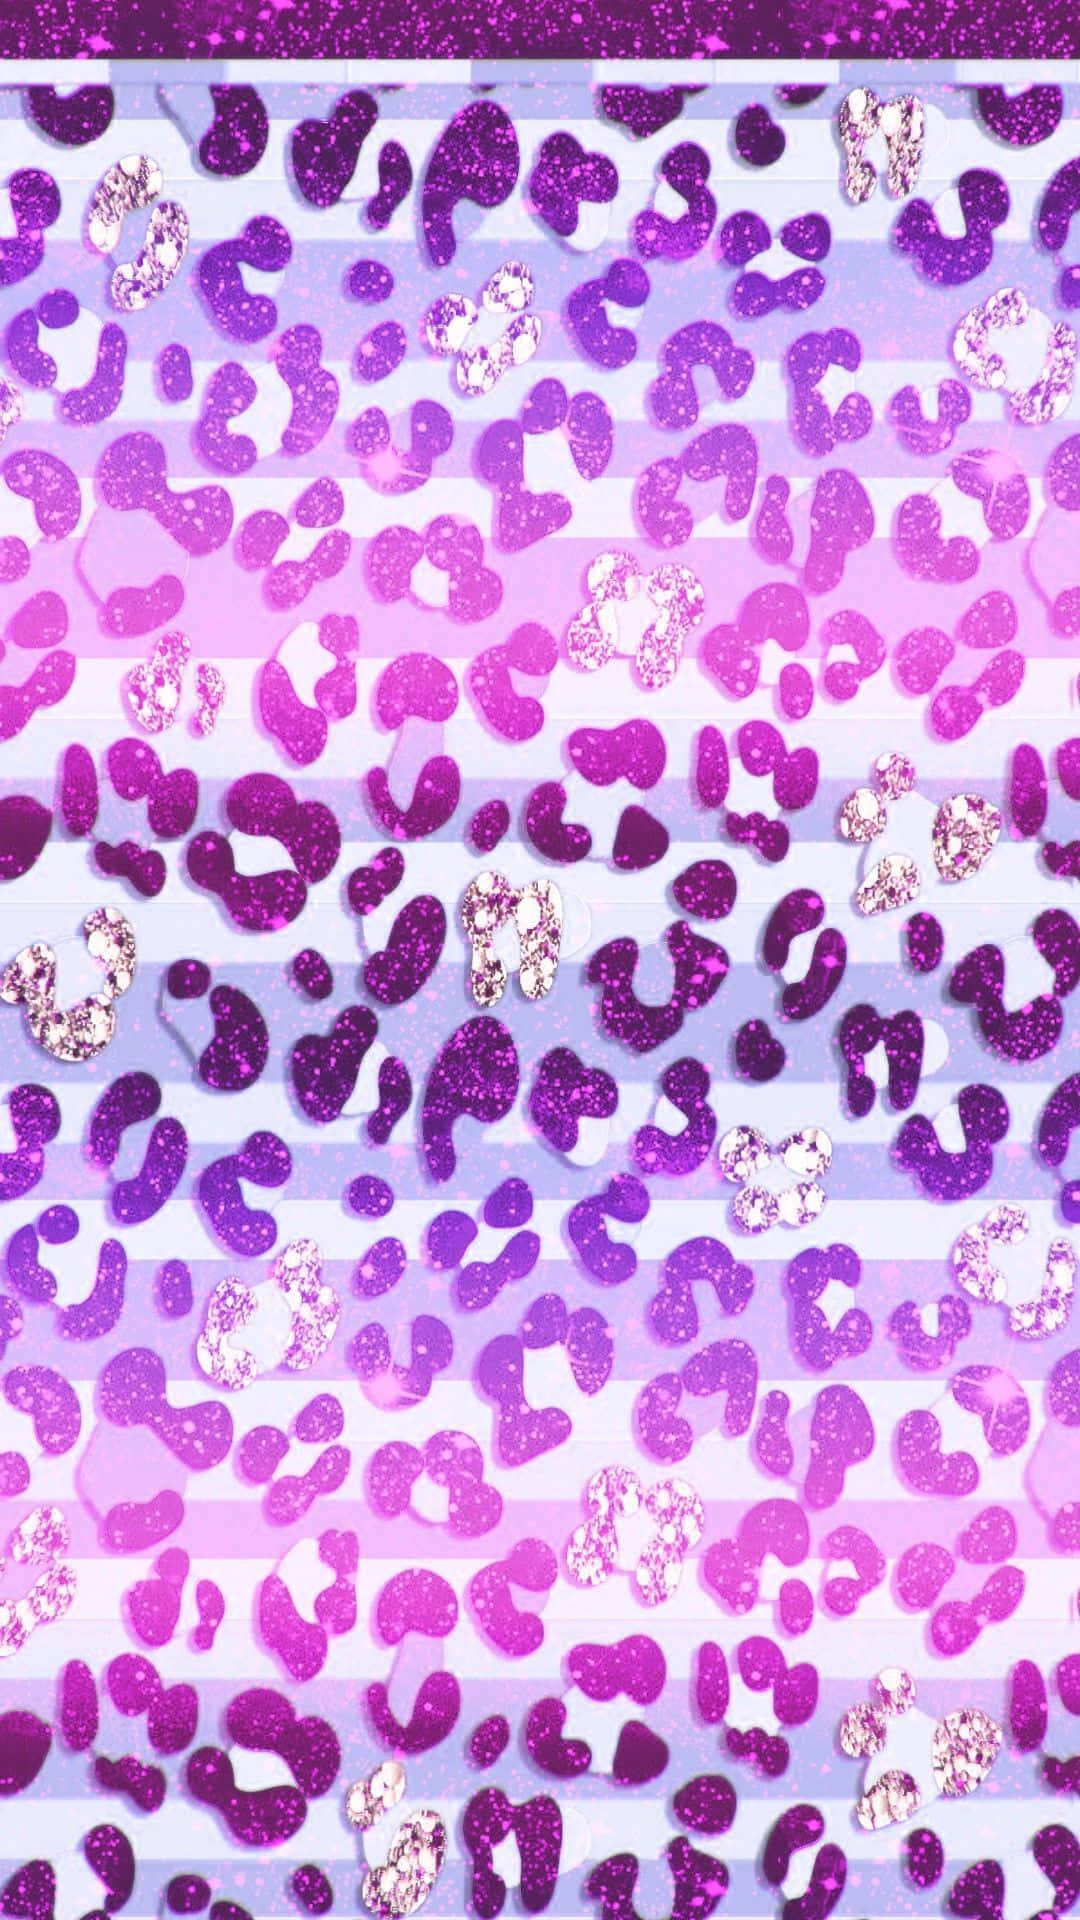 Download Purple Glitter Aesthetic Cute Cheetah Print Wallpaper | Wallpapers .com